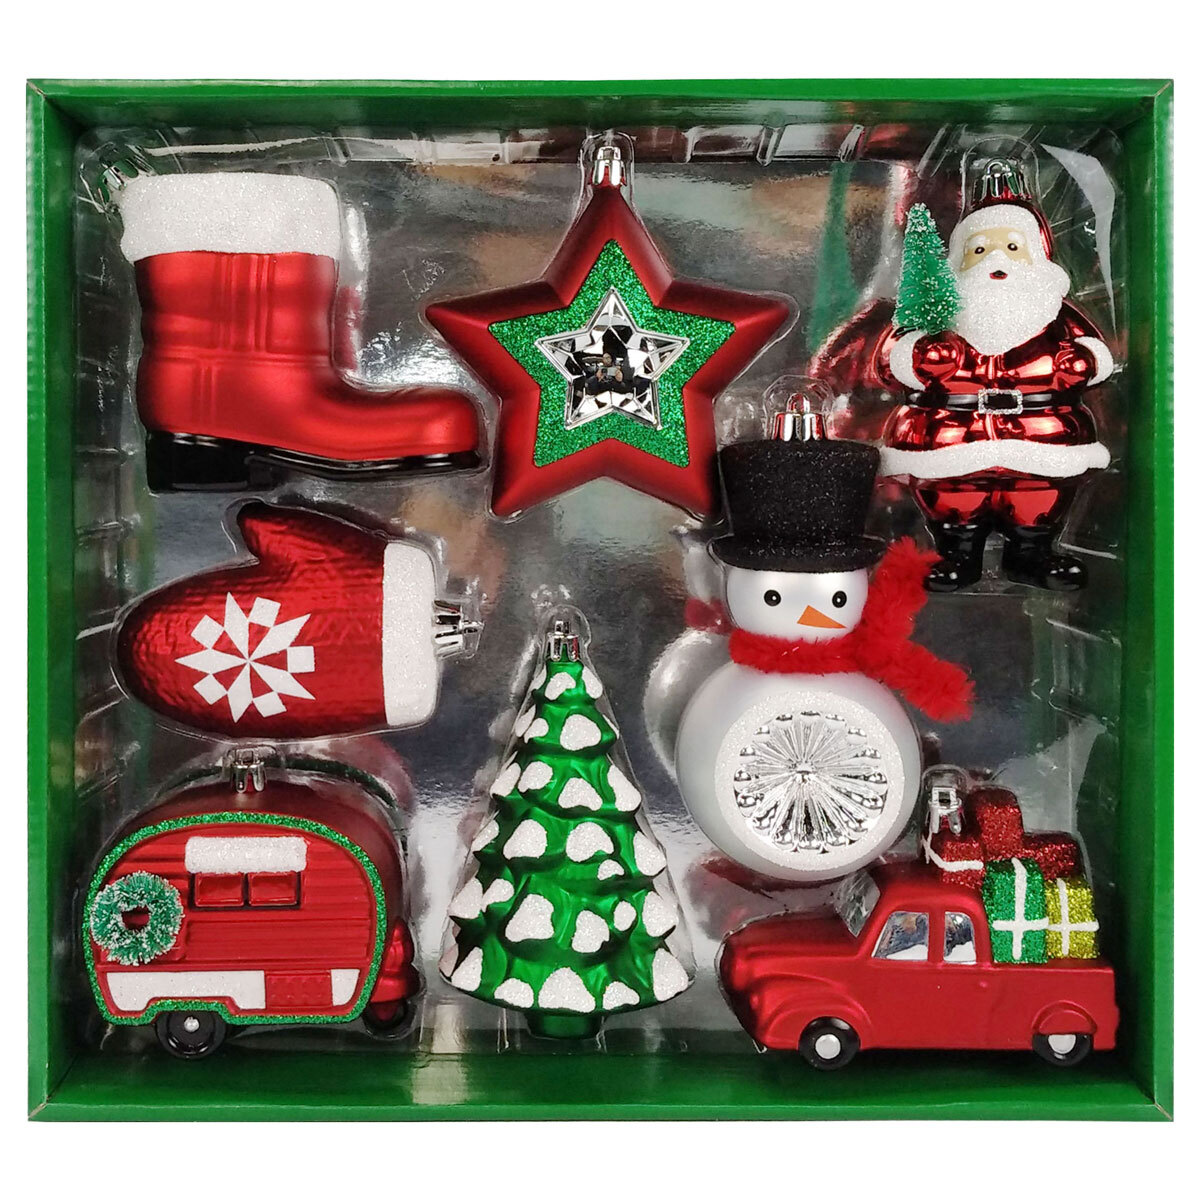 10 cm Shatter Resistant Novelty Christmas Ornaments Set of 8